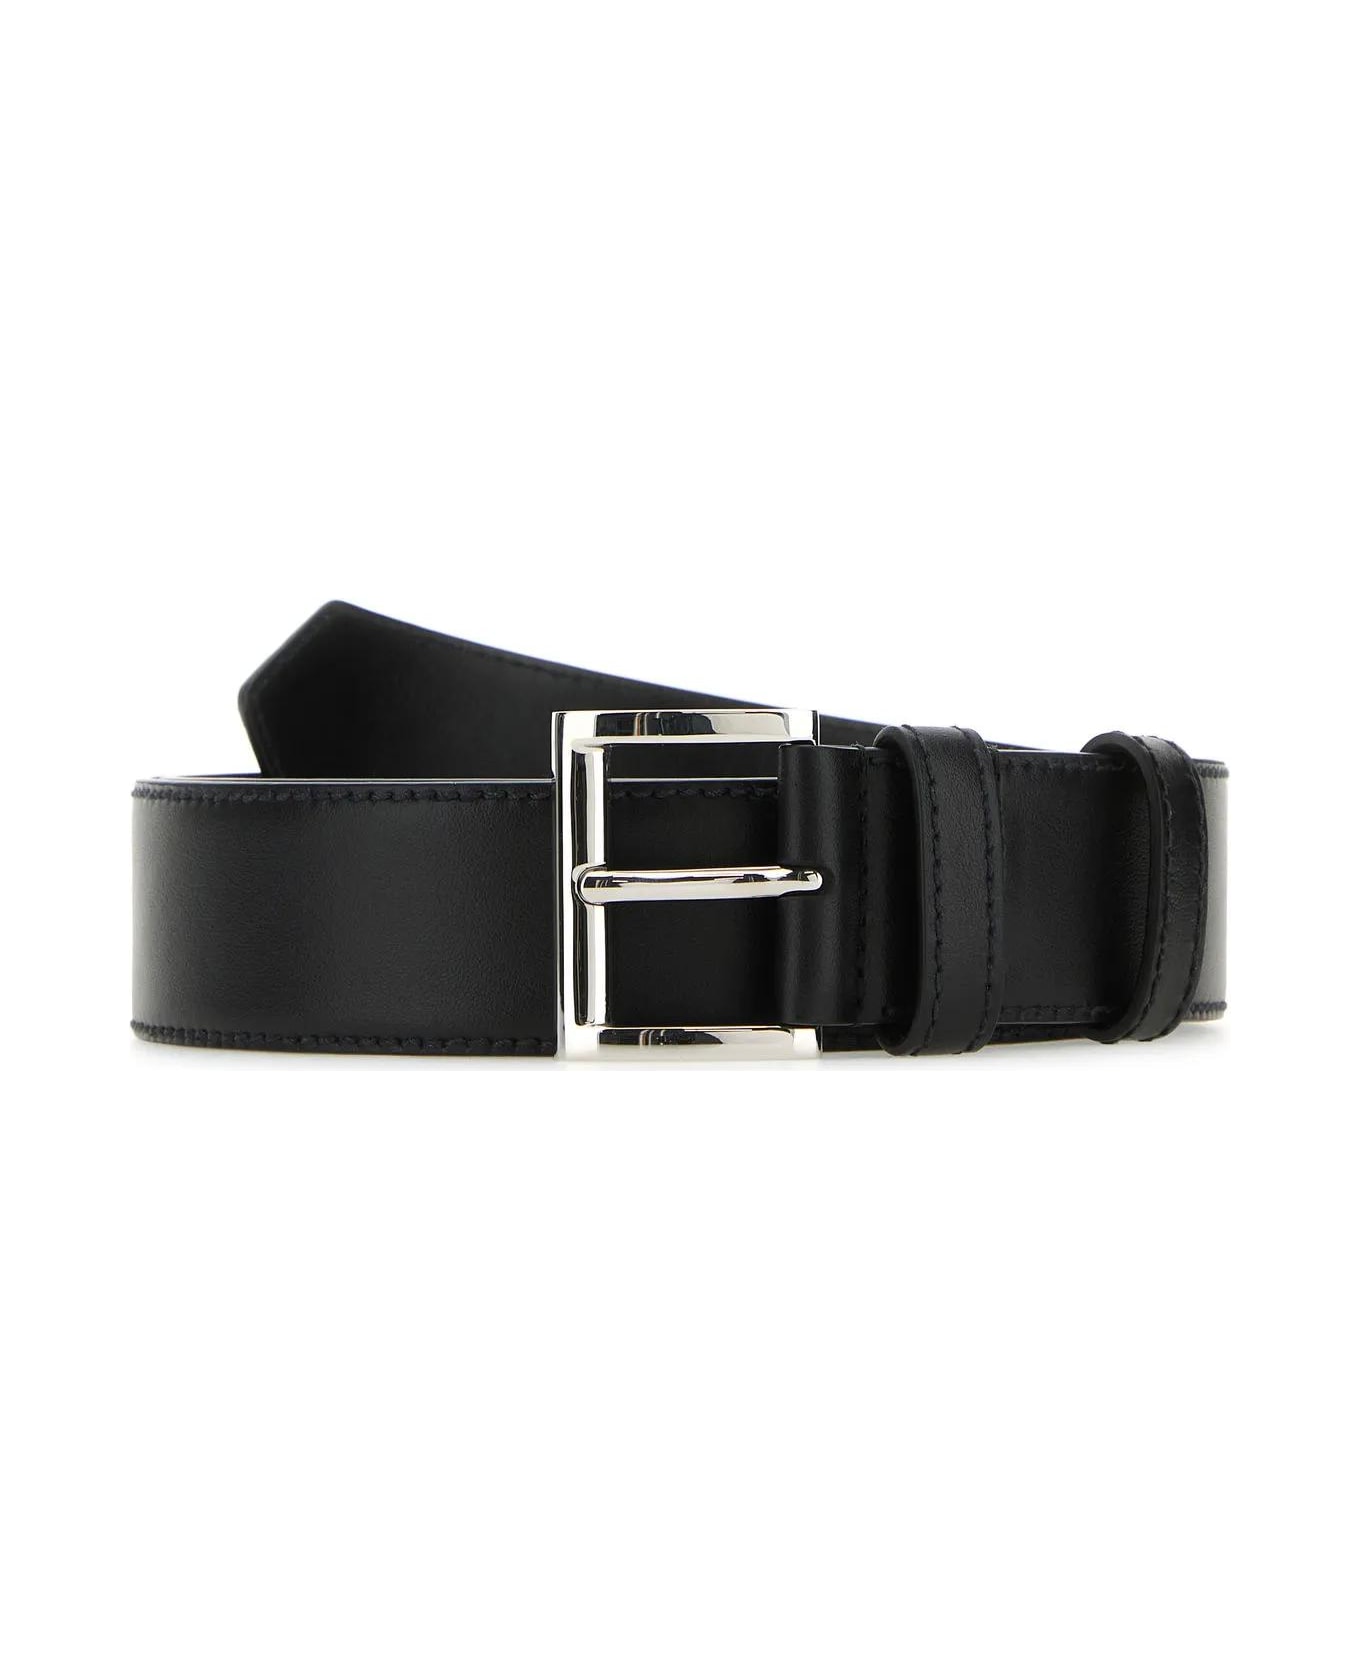 Prada Black Leather Belt - Nero ベルト